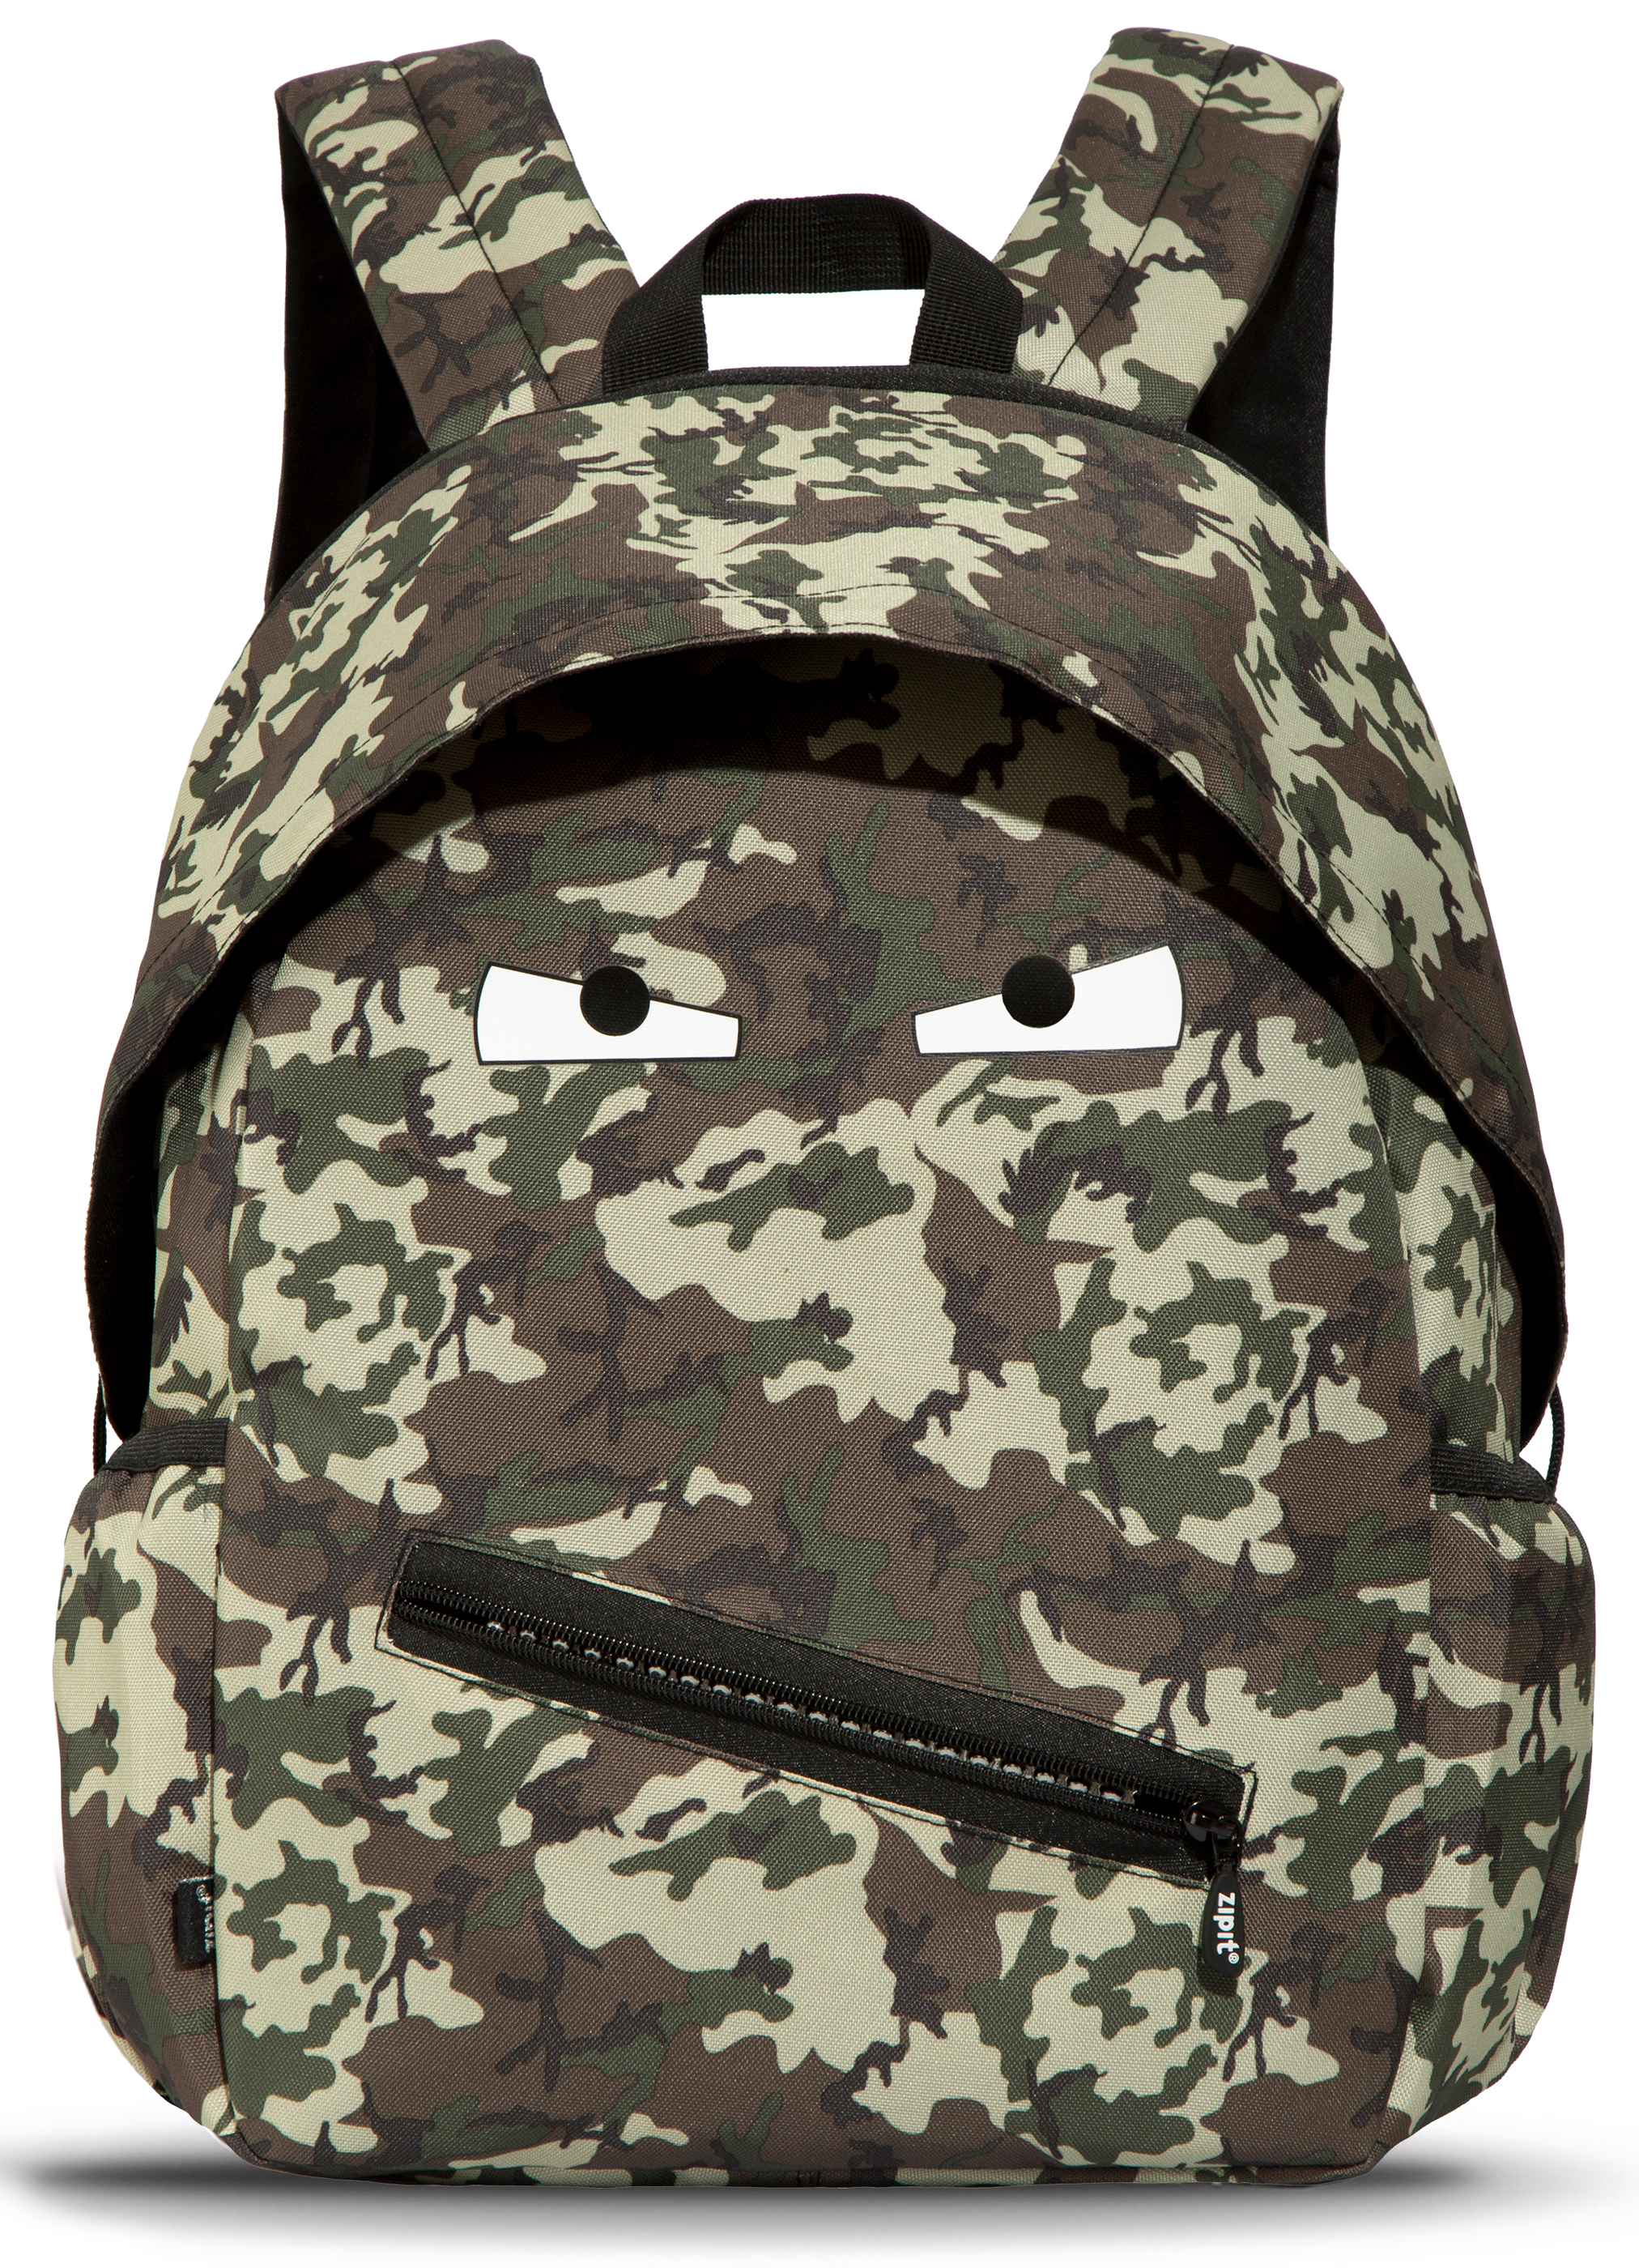 ZIPIT Grillz Backpack for Boys Elementary School & Preschool, Sturdy & Lightweight (Camo Green) - image 1 of 10